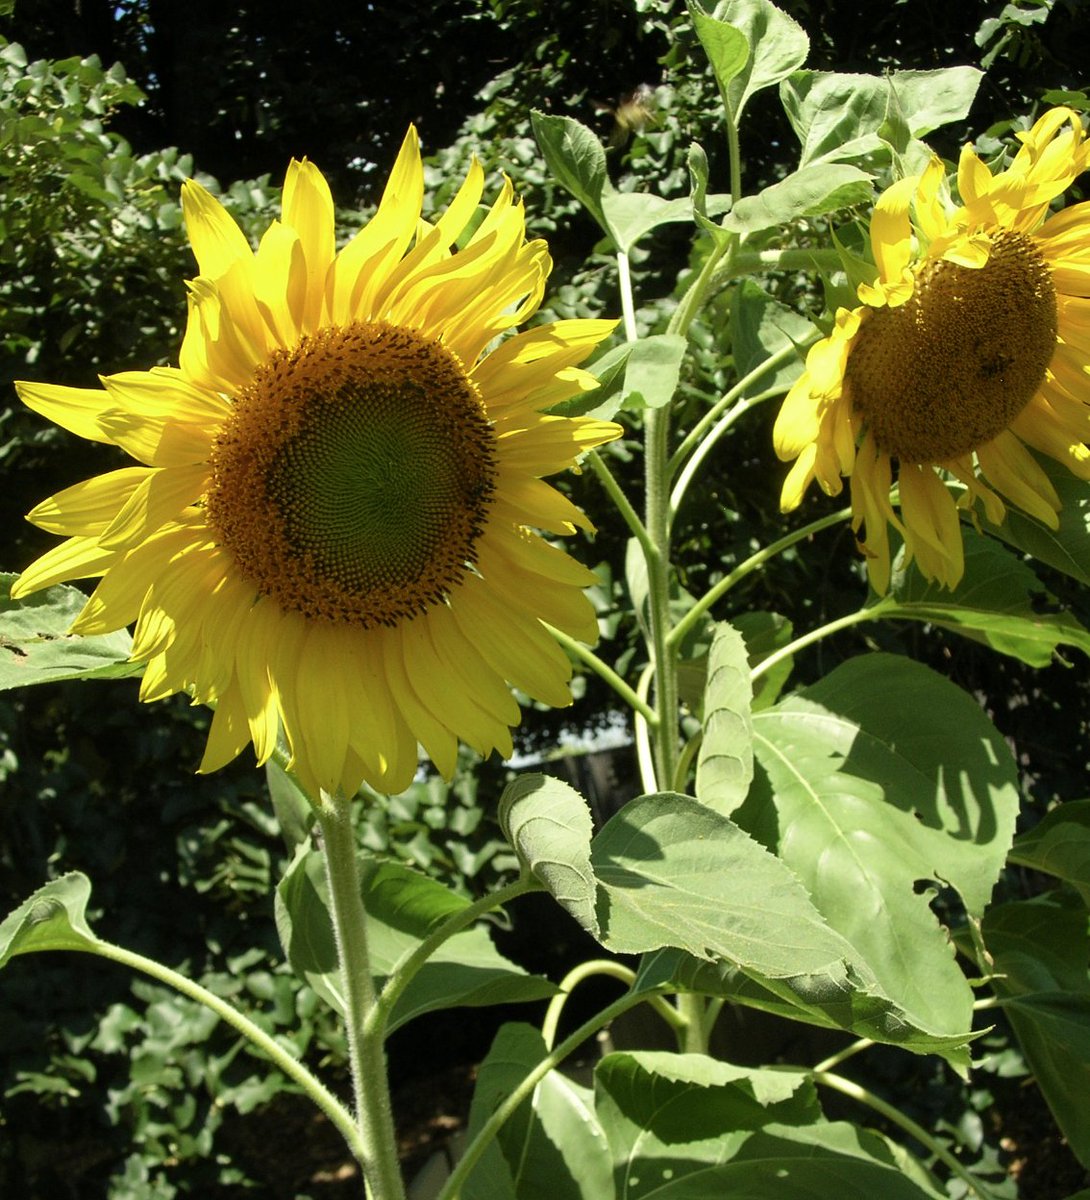 Sunflowers at the Brooklyn Botanic Garden. Photo taken a couple summers ago. #SundayYellow #Flowers